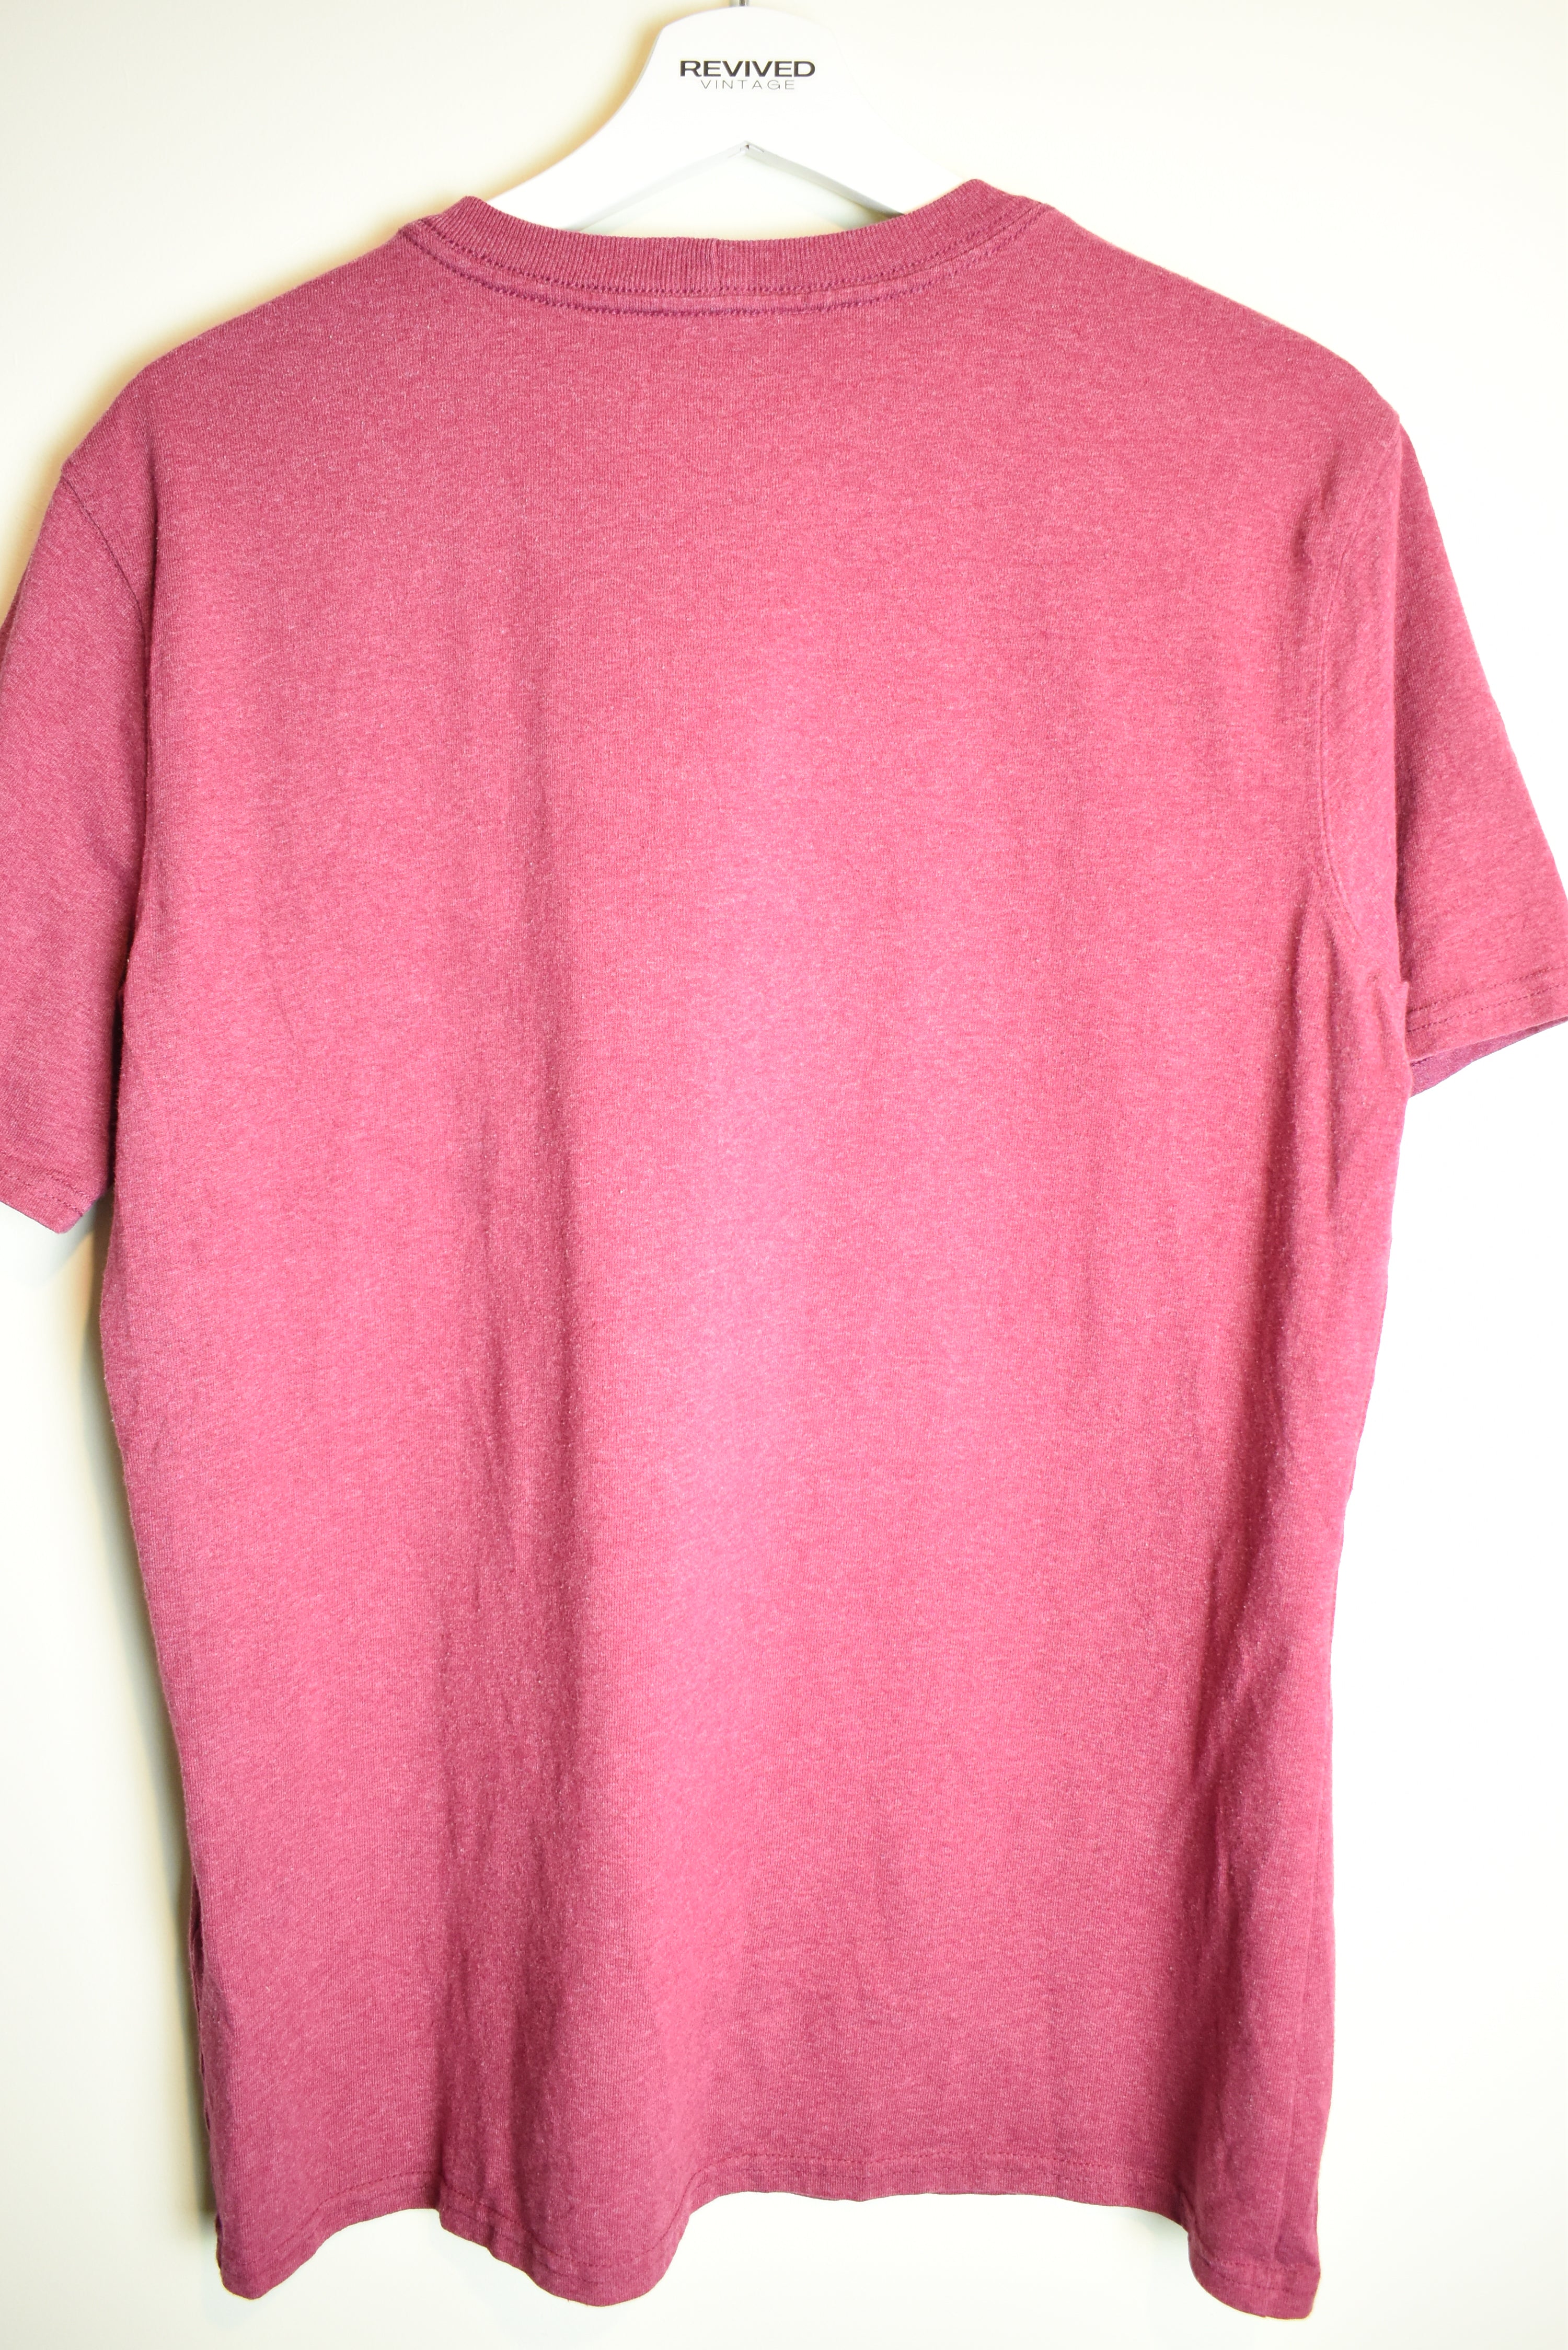 Vintage Carhartt Maroon Cotton T-Shirt Loose Fit Medium